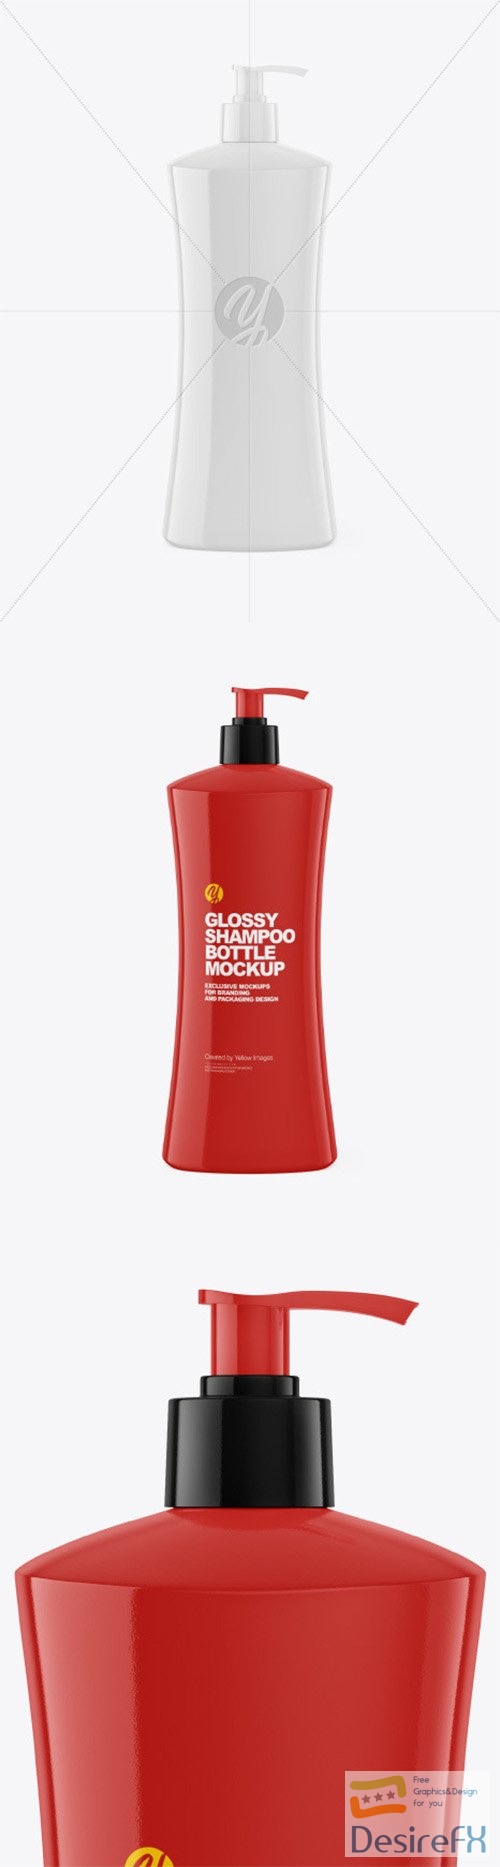 Glossy Shampoo Bottle Mockup 82046 TIF